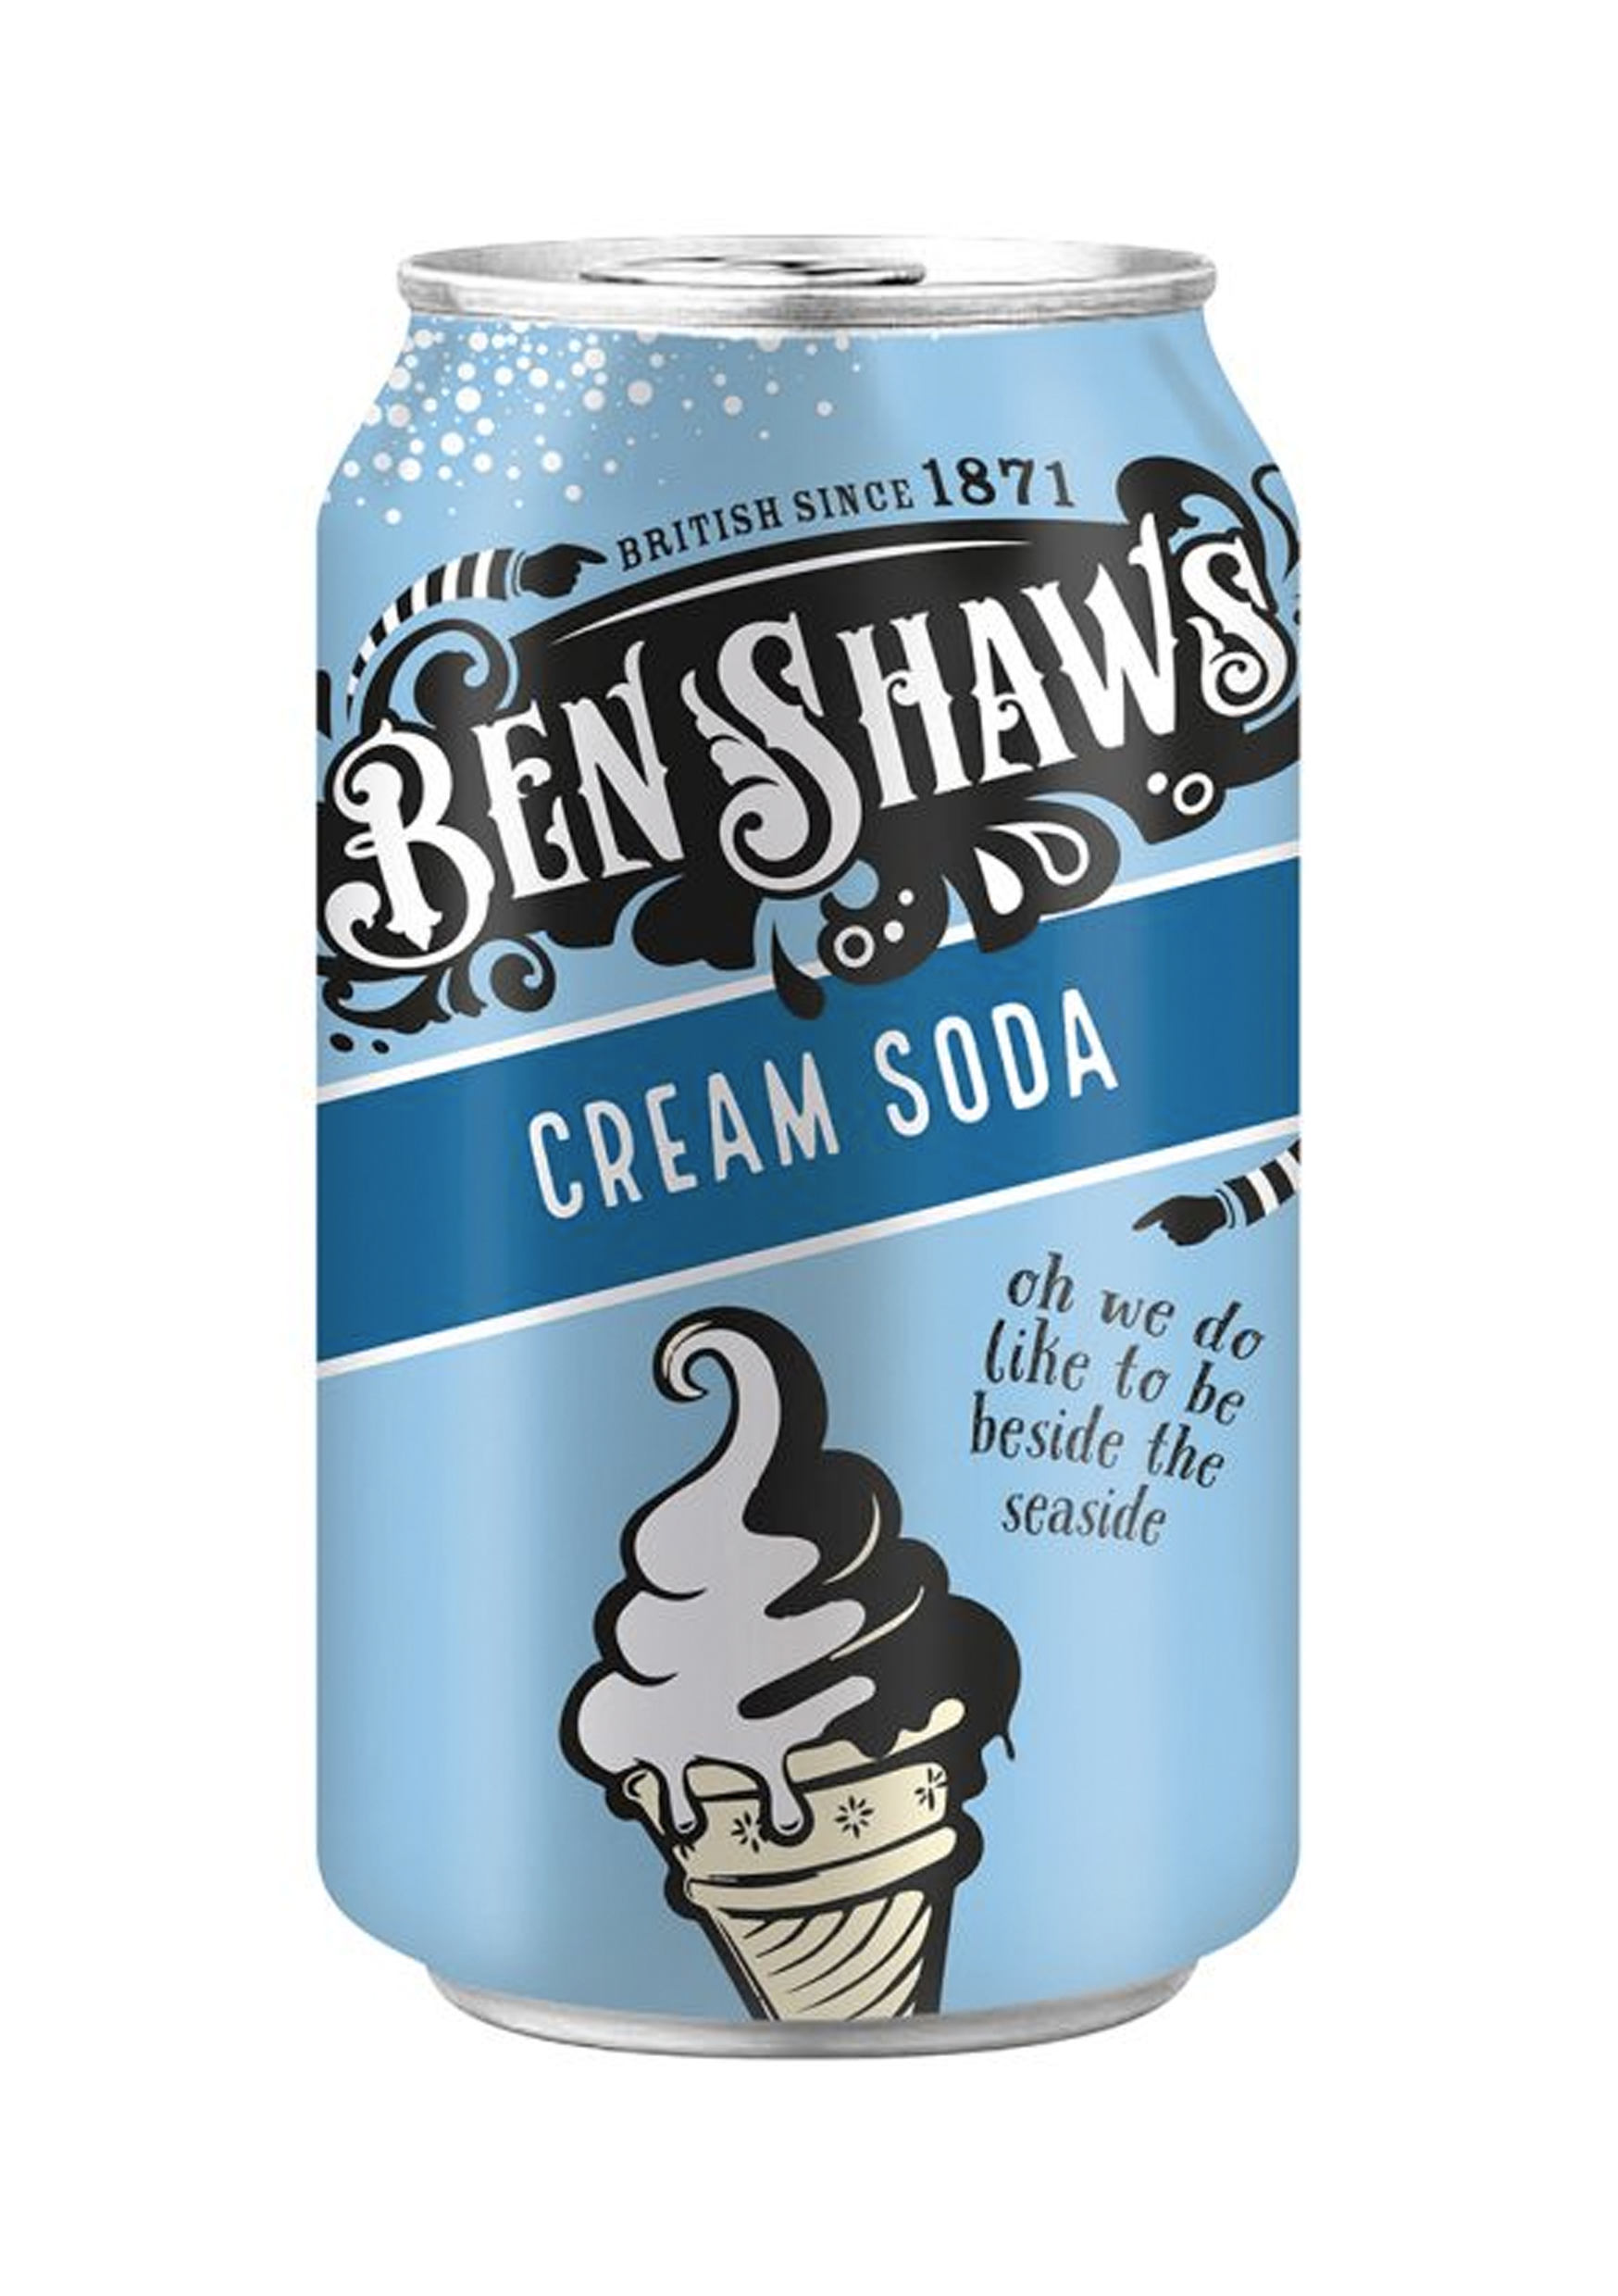 Ben Shaws Cream Soda